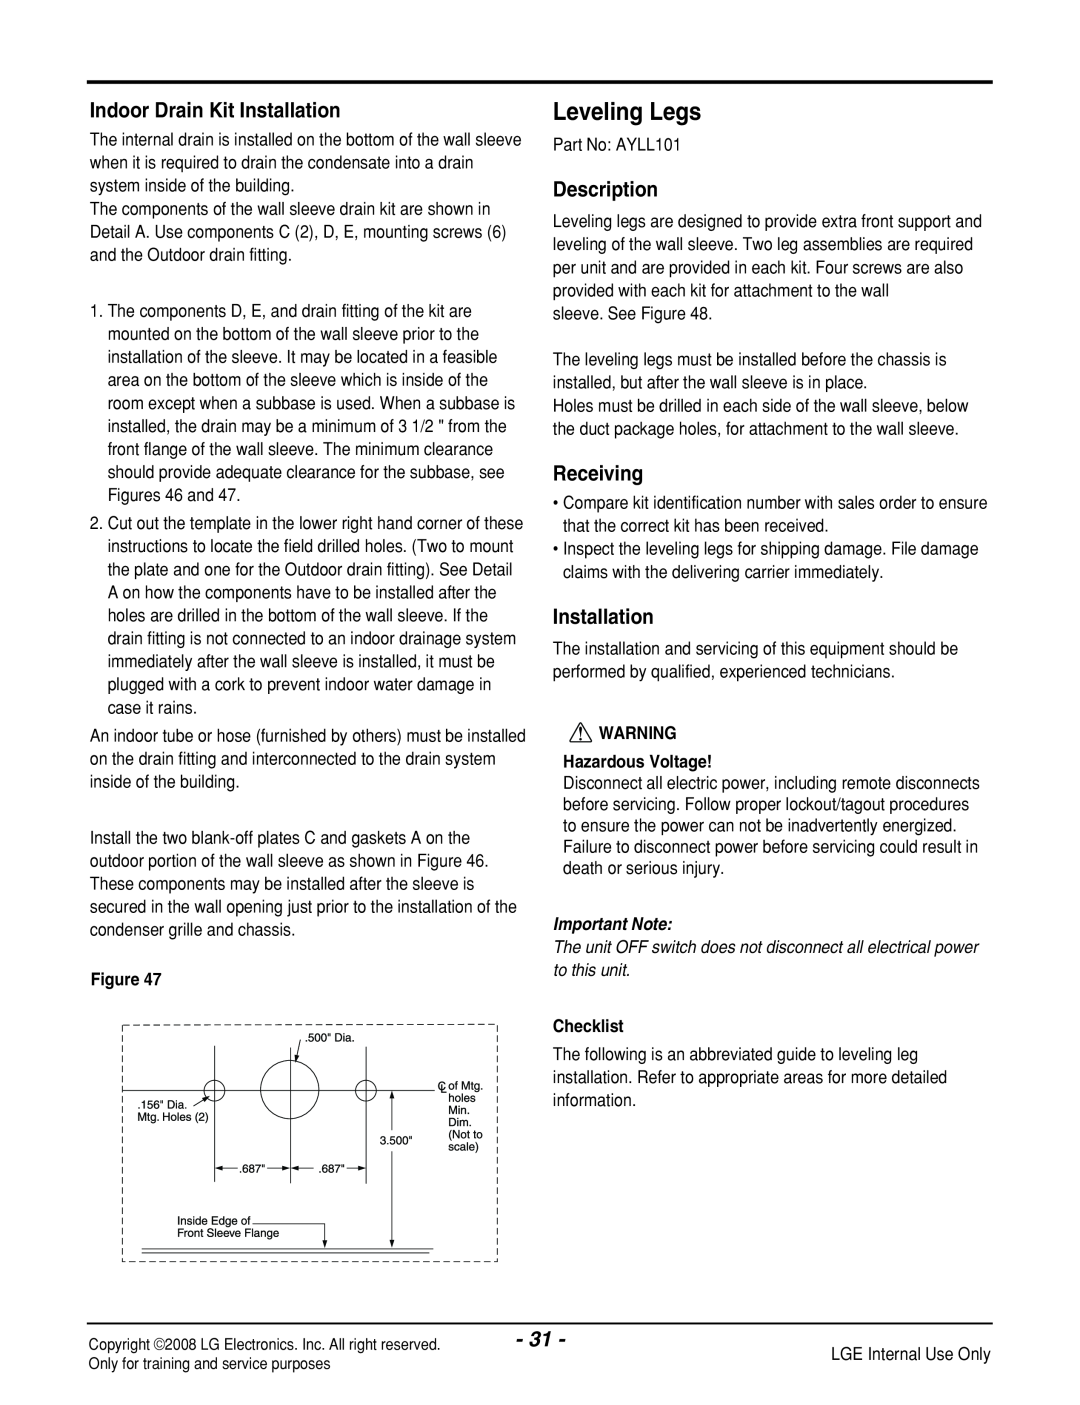 LG Electronics LP121CEM-Y8 manual Leveling Legs, Indoor Drain Kit Installation, Description, Receiving, Hazardous Voltage 